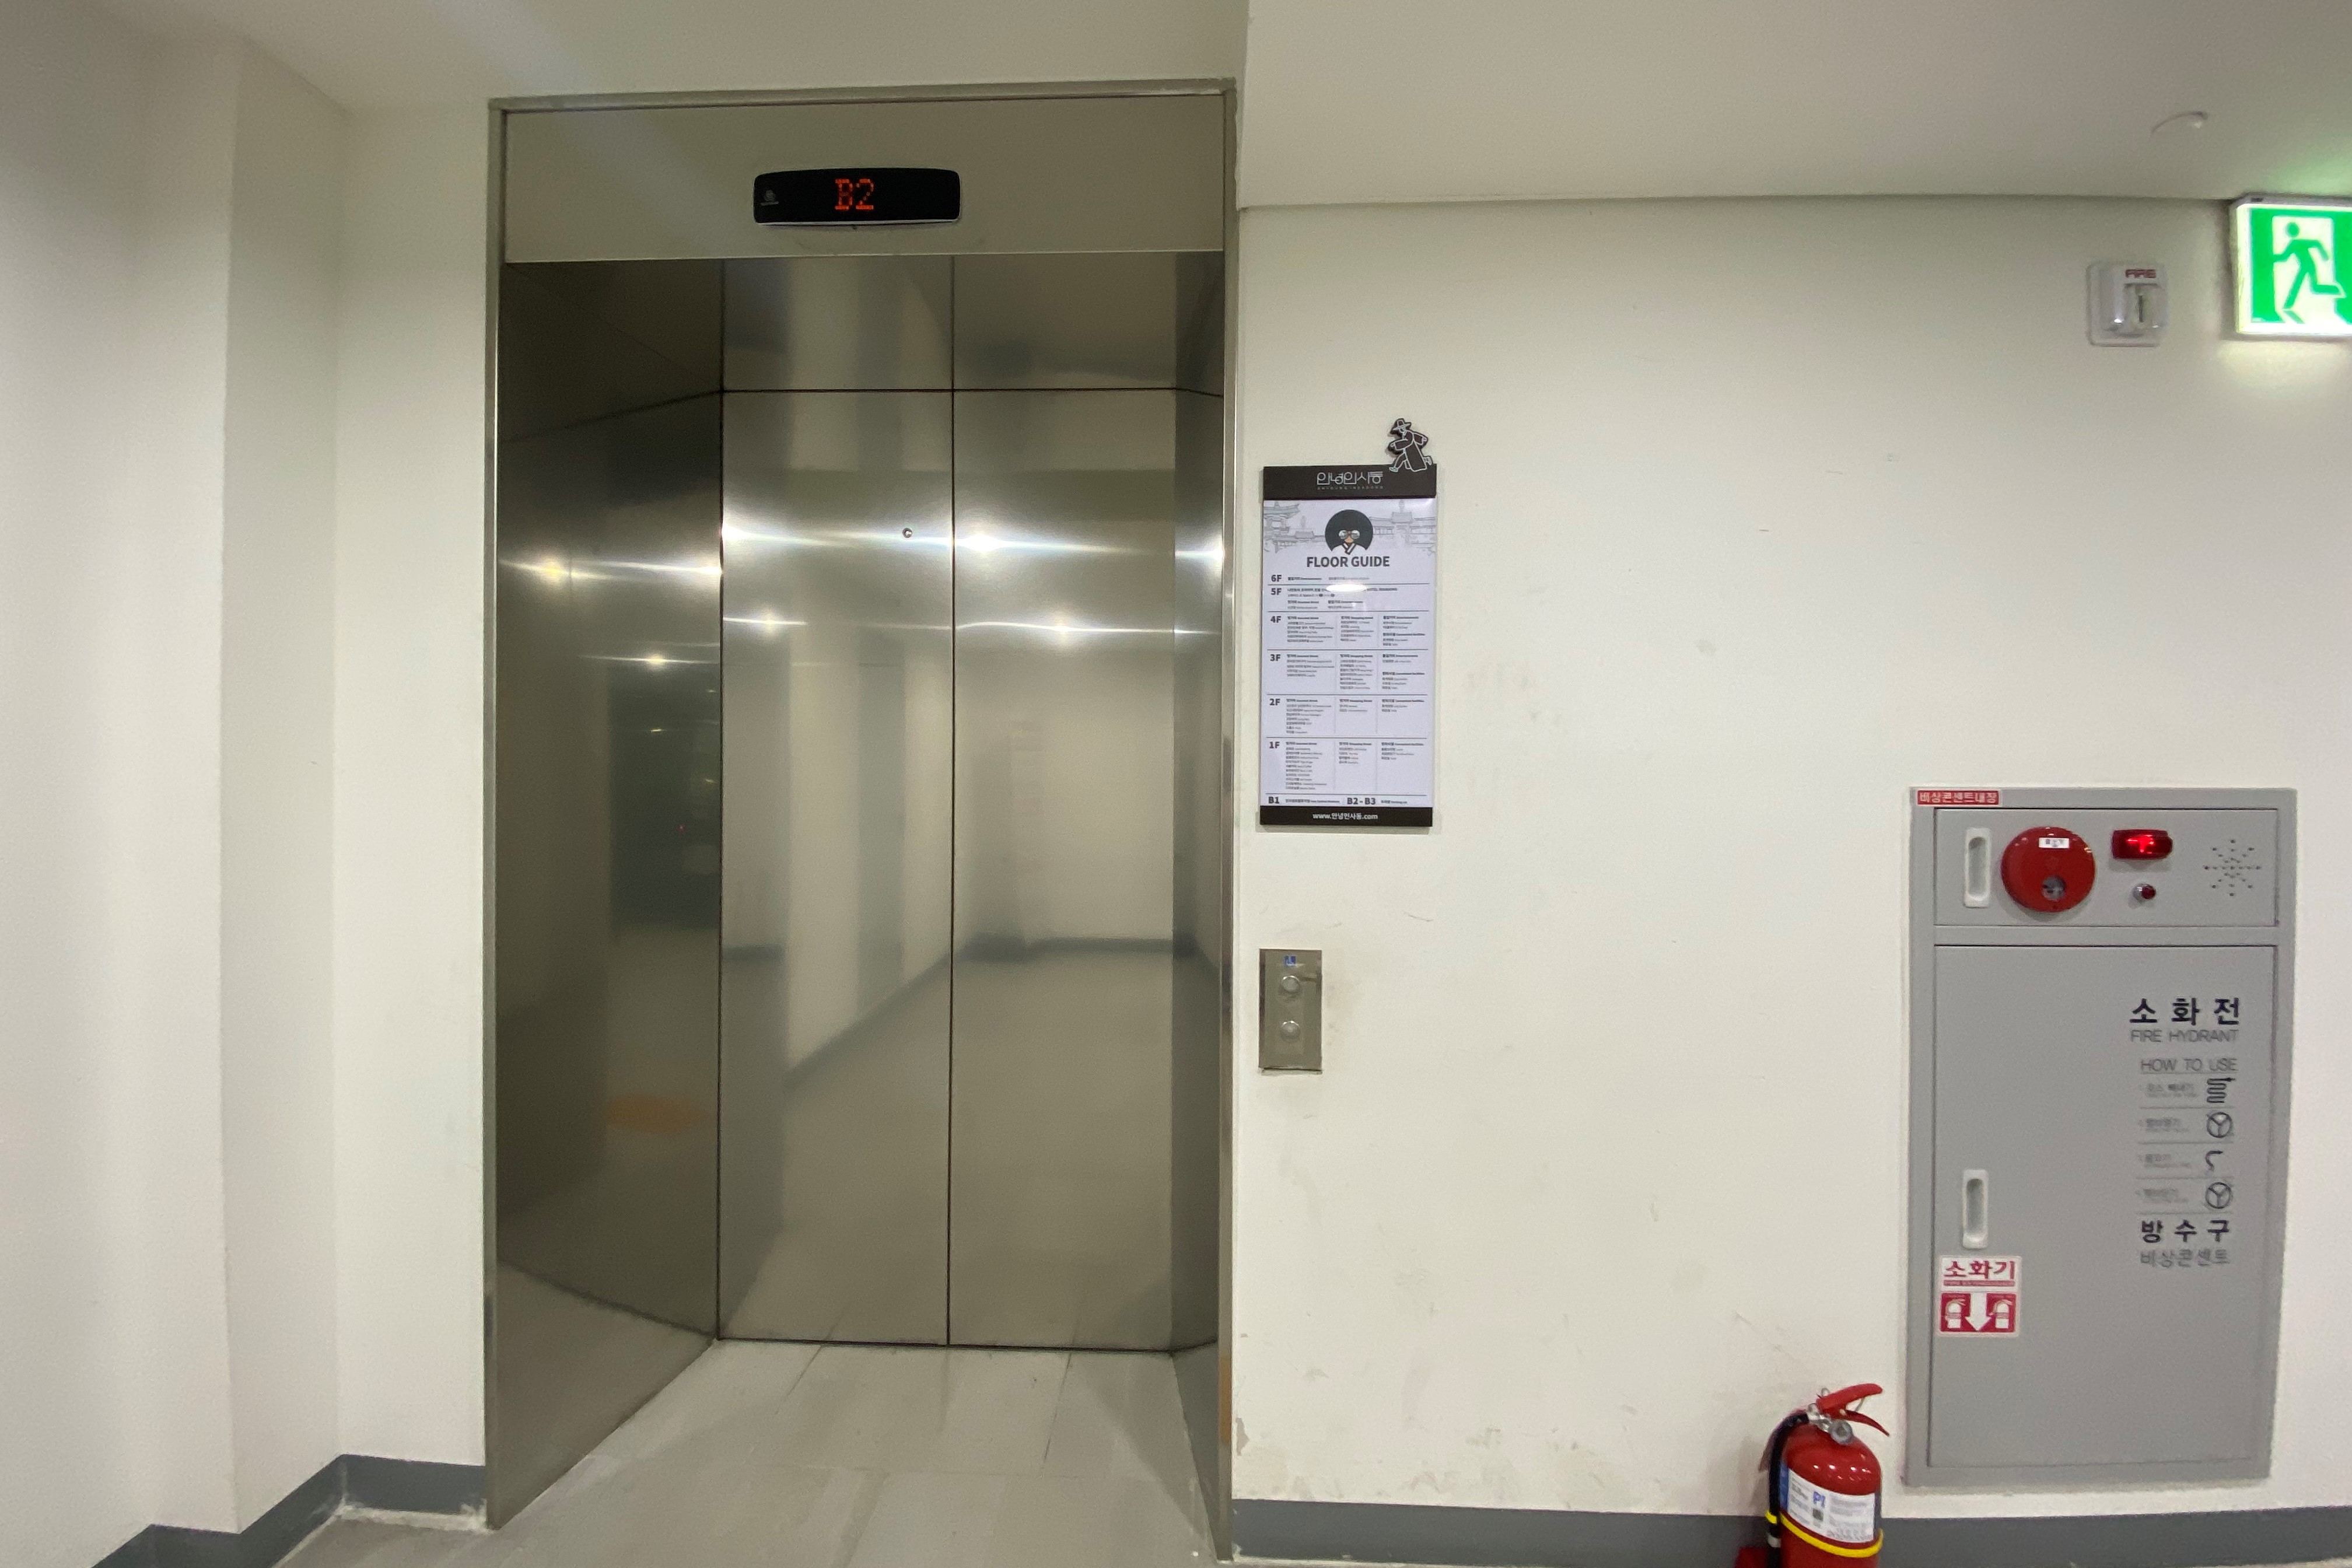 Elevator0 : Elevator with closed doors